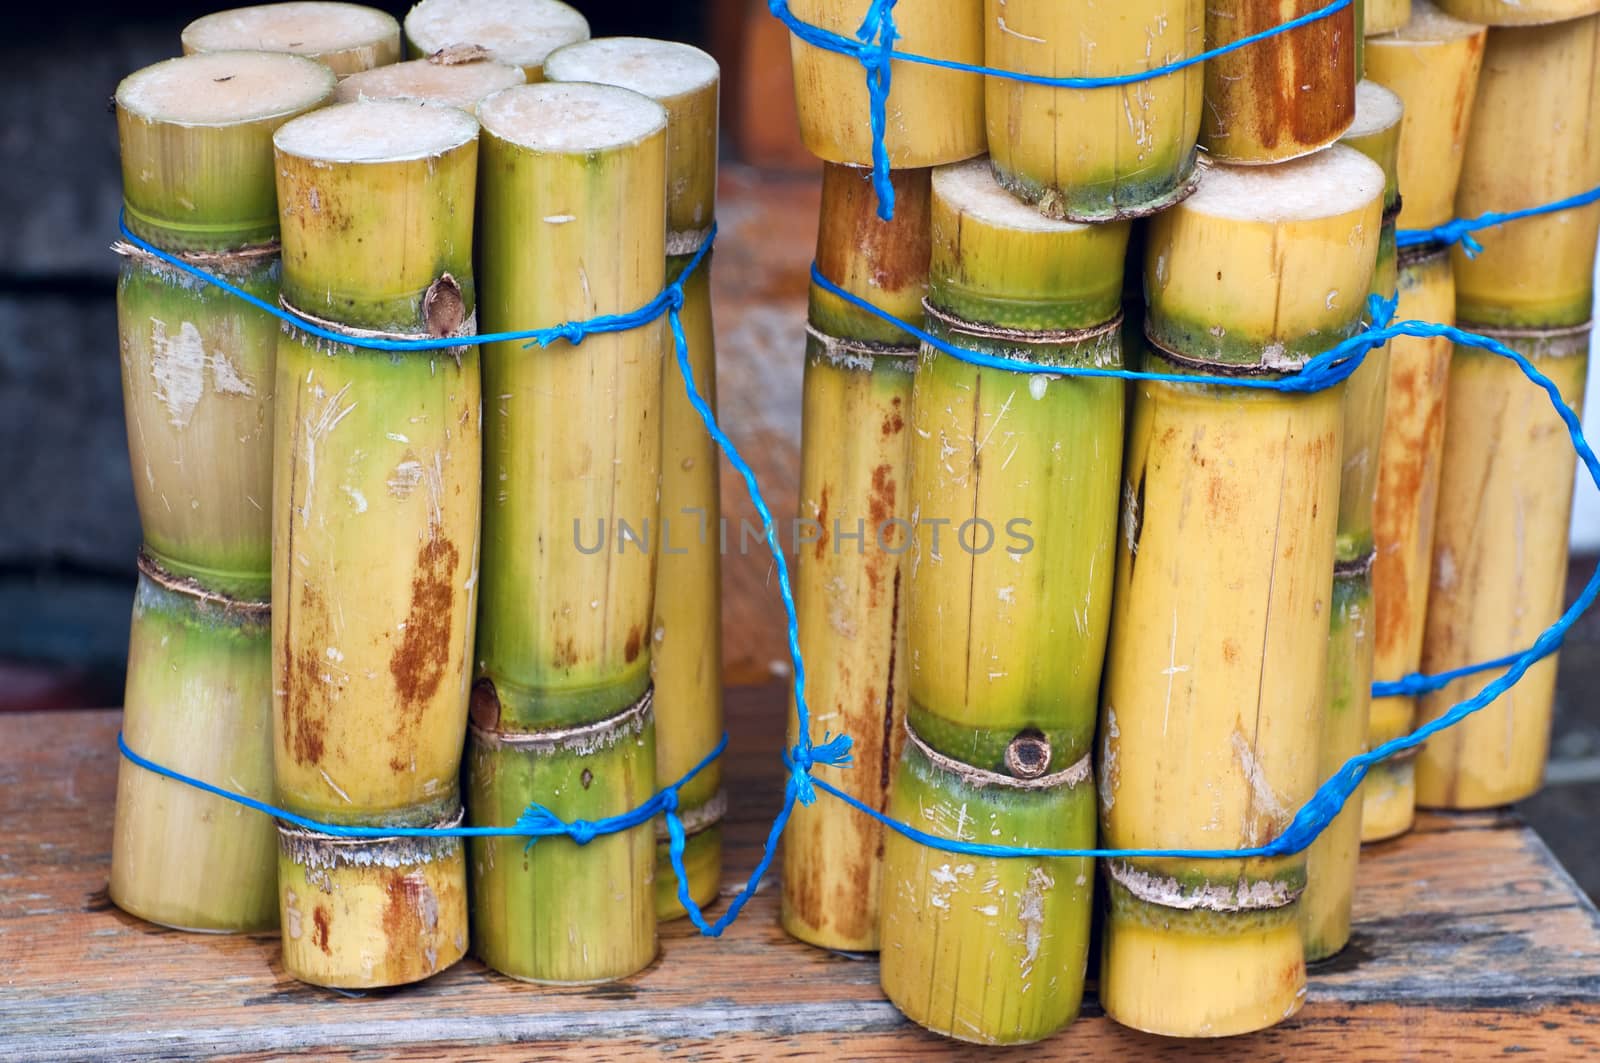 A close up photo of a stack of sugar cane sticks 